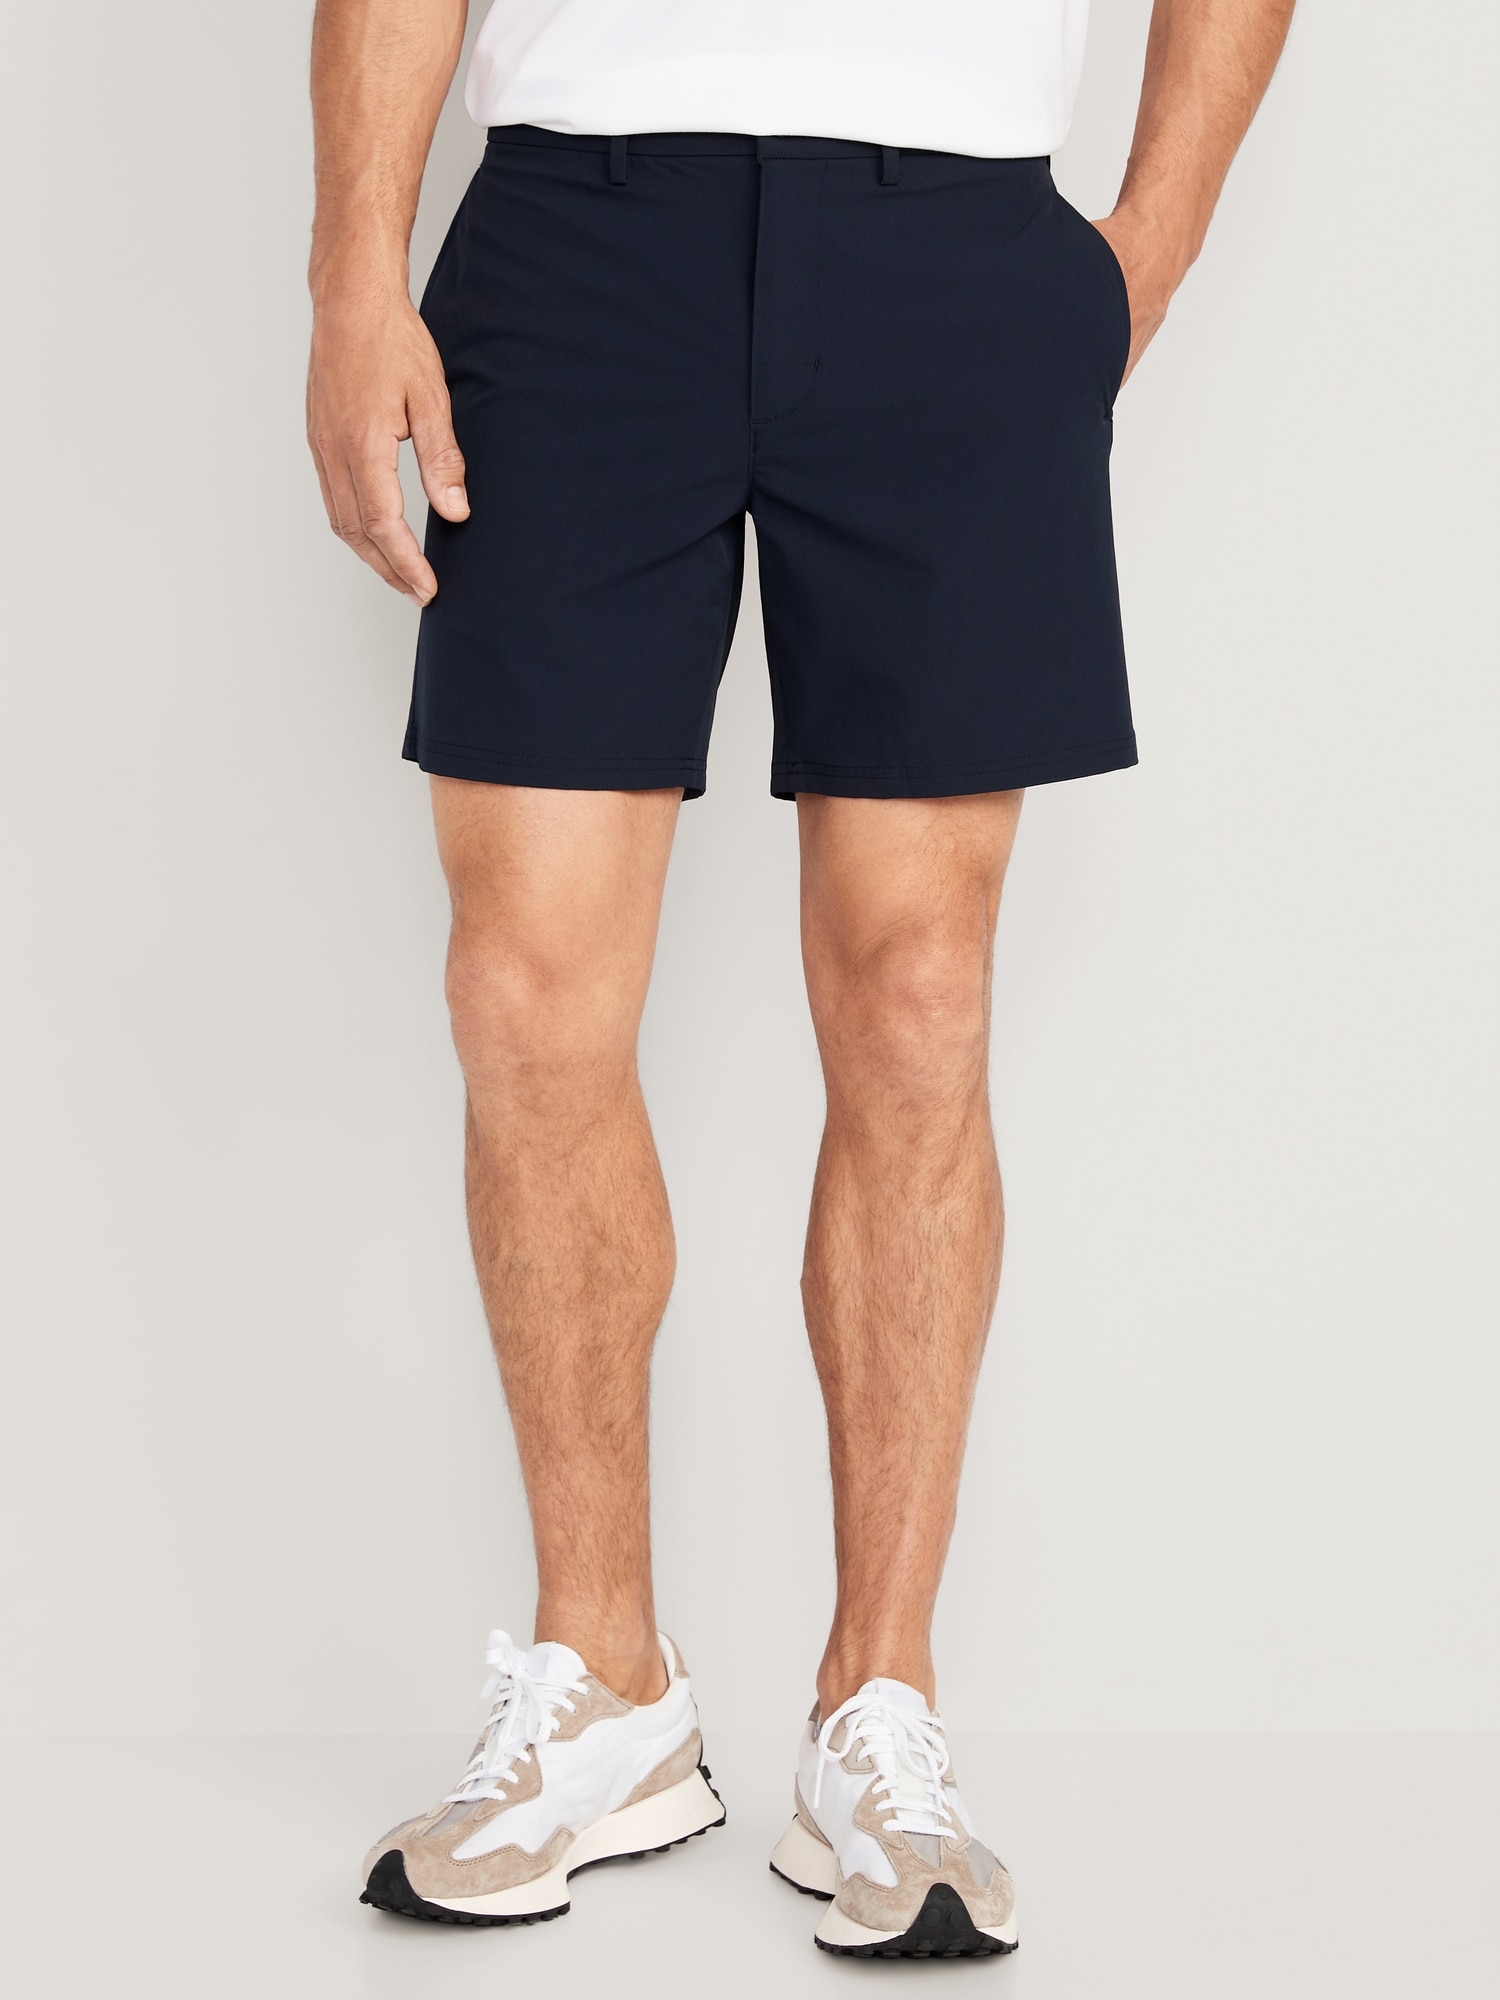 StretchTech Nylon Chino Shorts -- 7-inch inseam